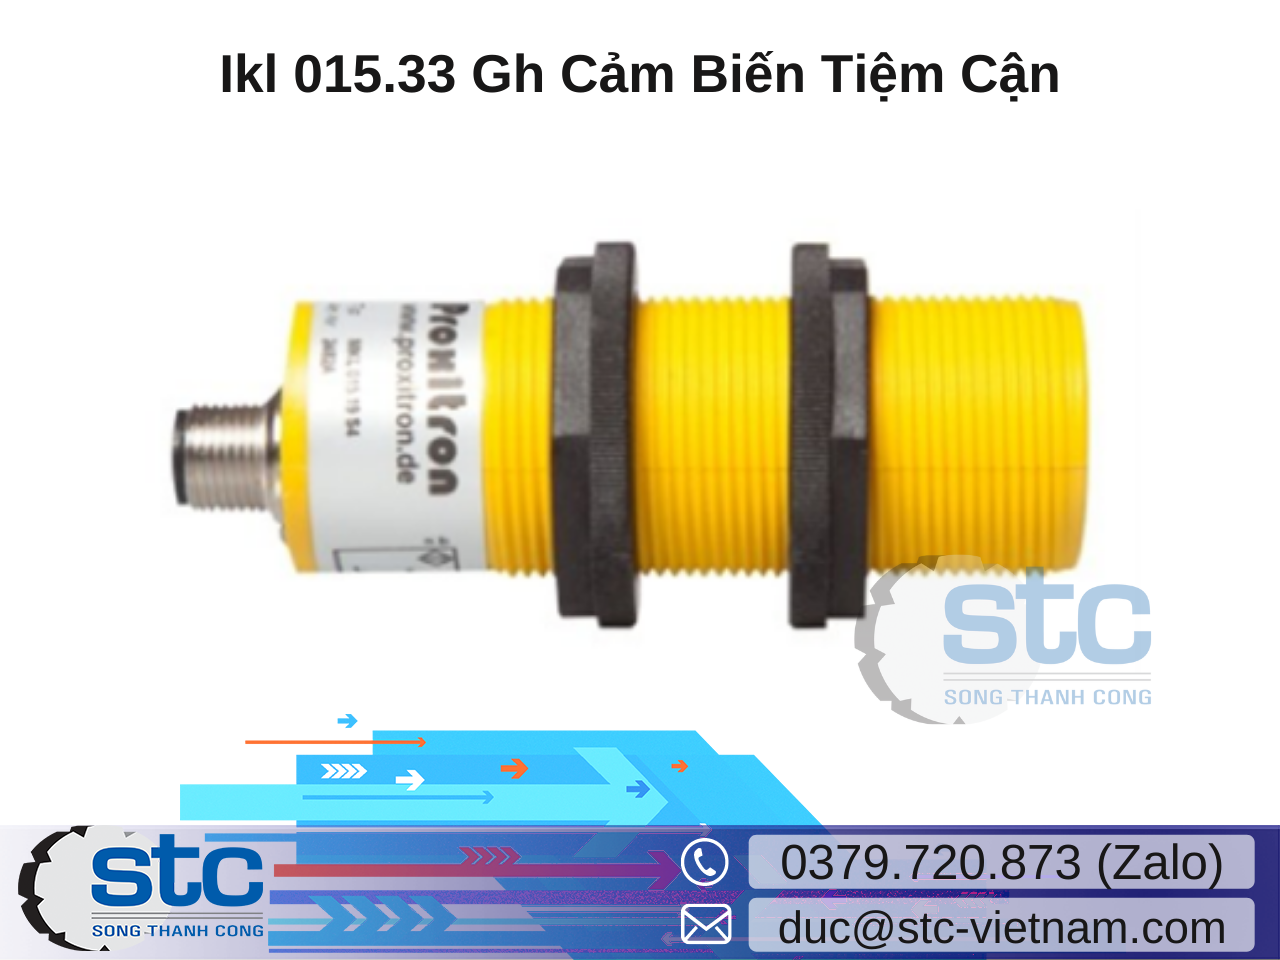 ikl-015-33-gh-cam-bien-tiem-can-proxitron.png